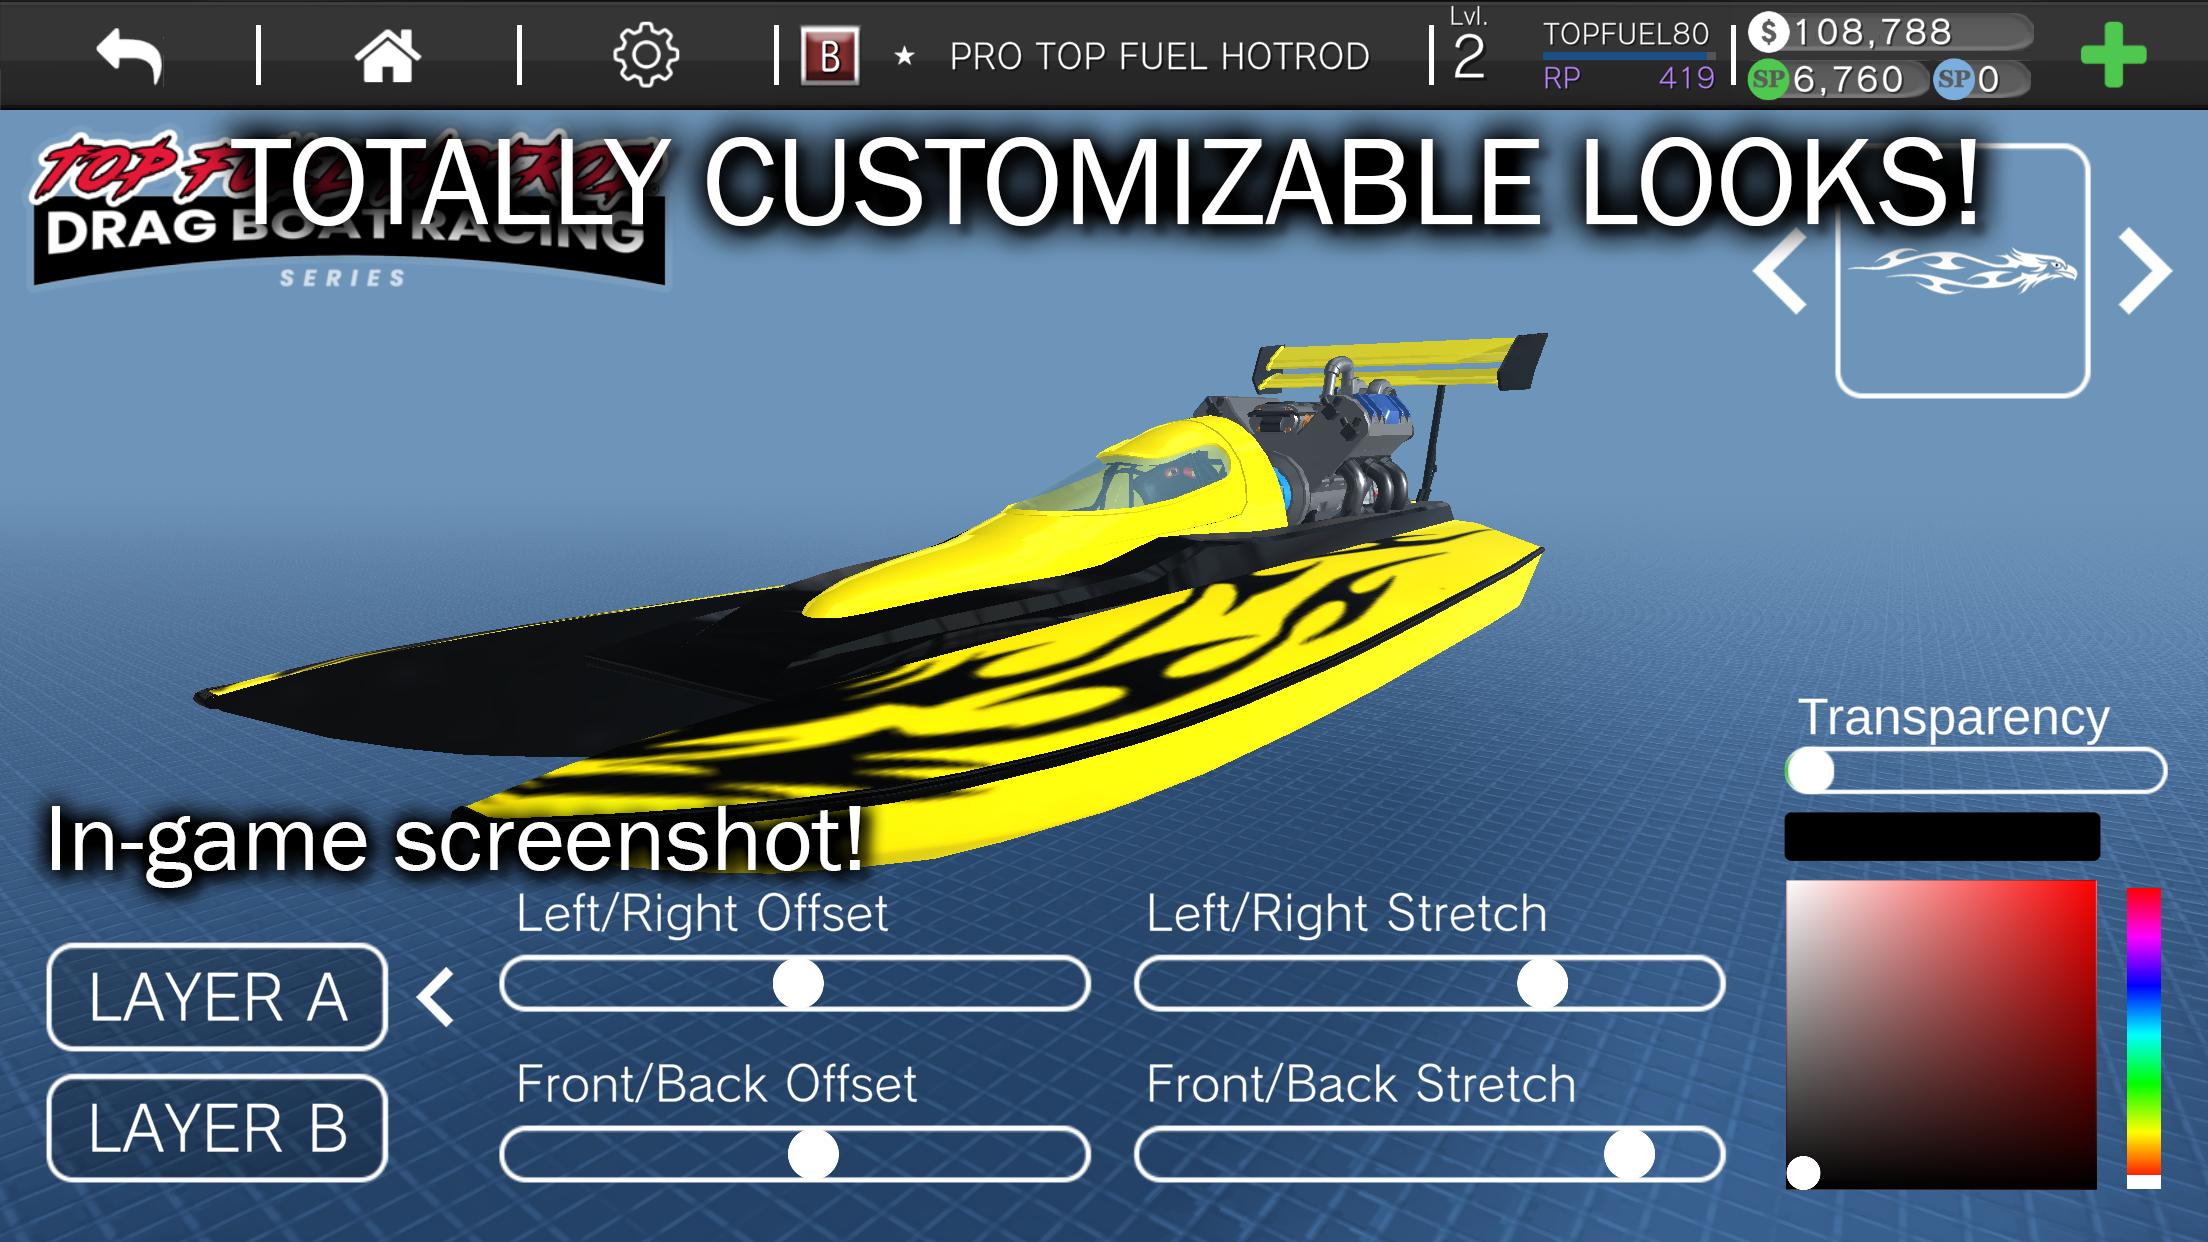 Top Fuel Hot Rod - Drag Boat Speed Racing Game 1.16 Screenshot 4